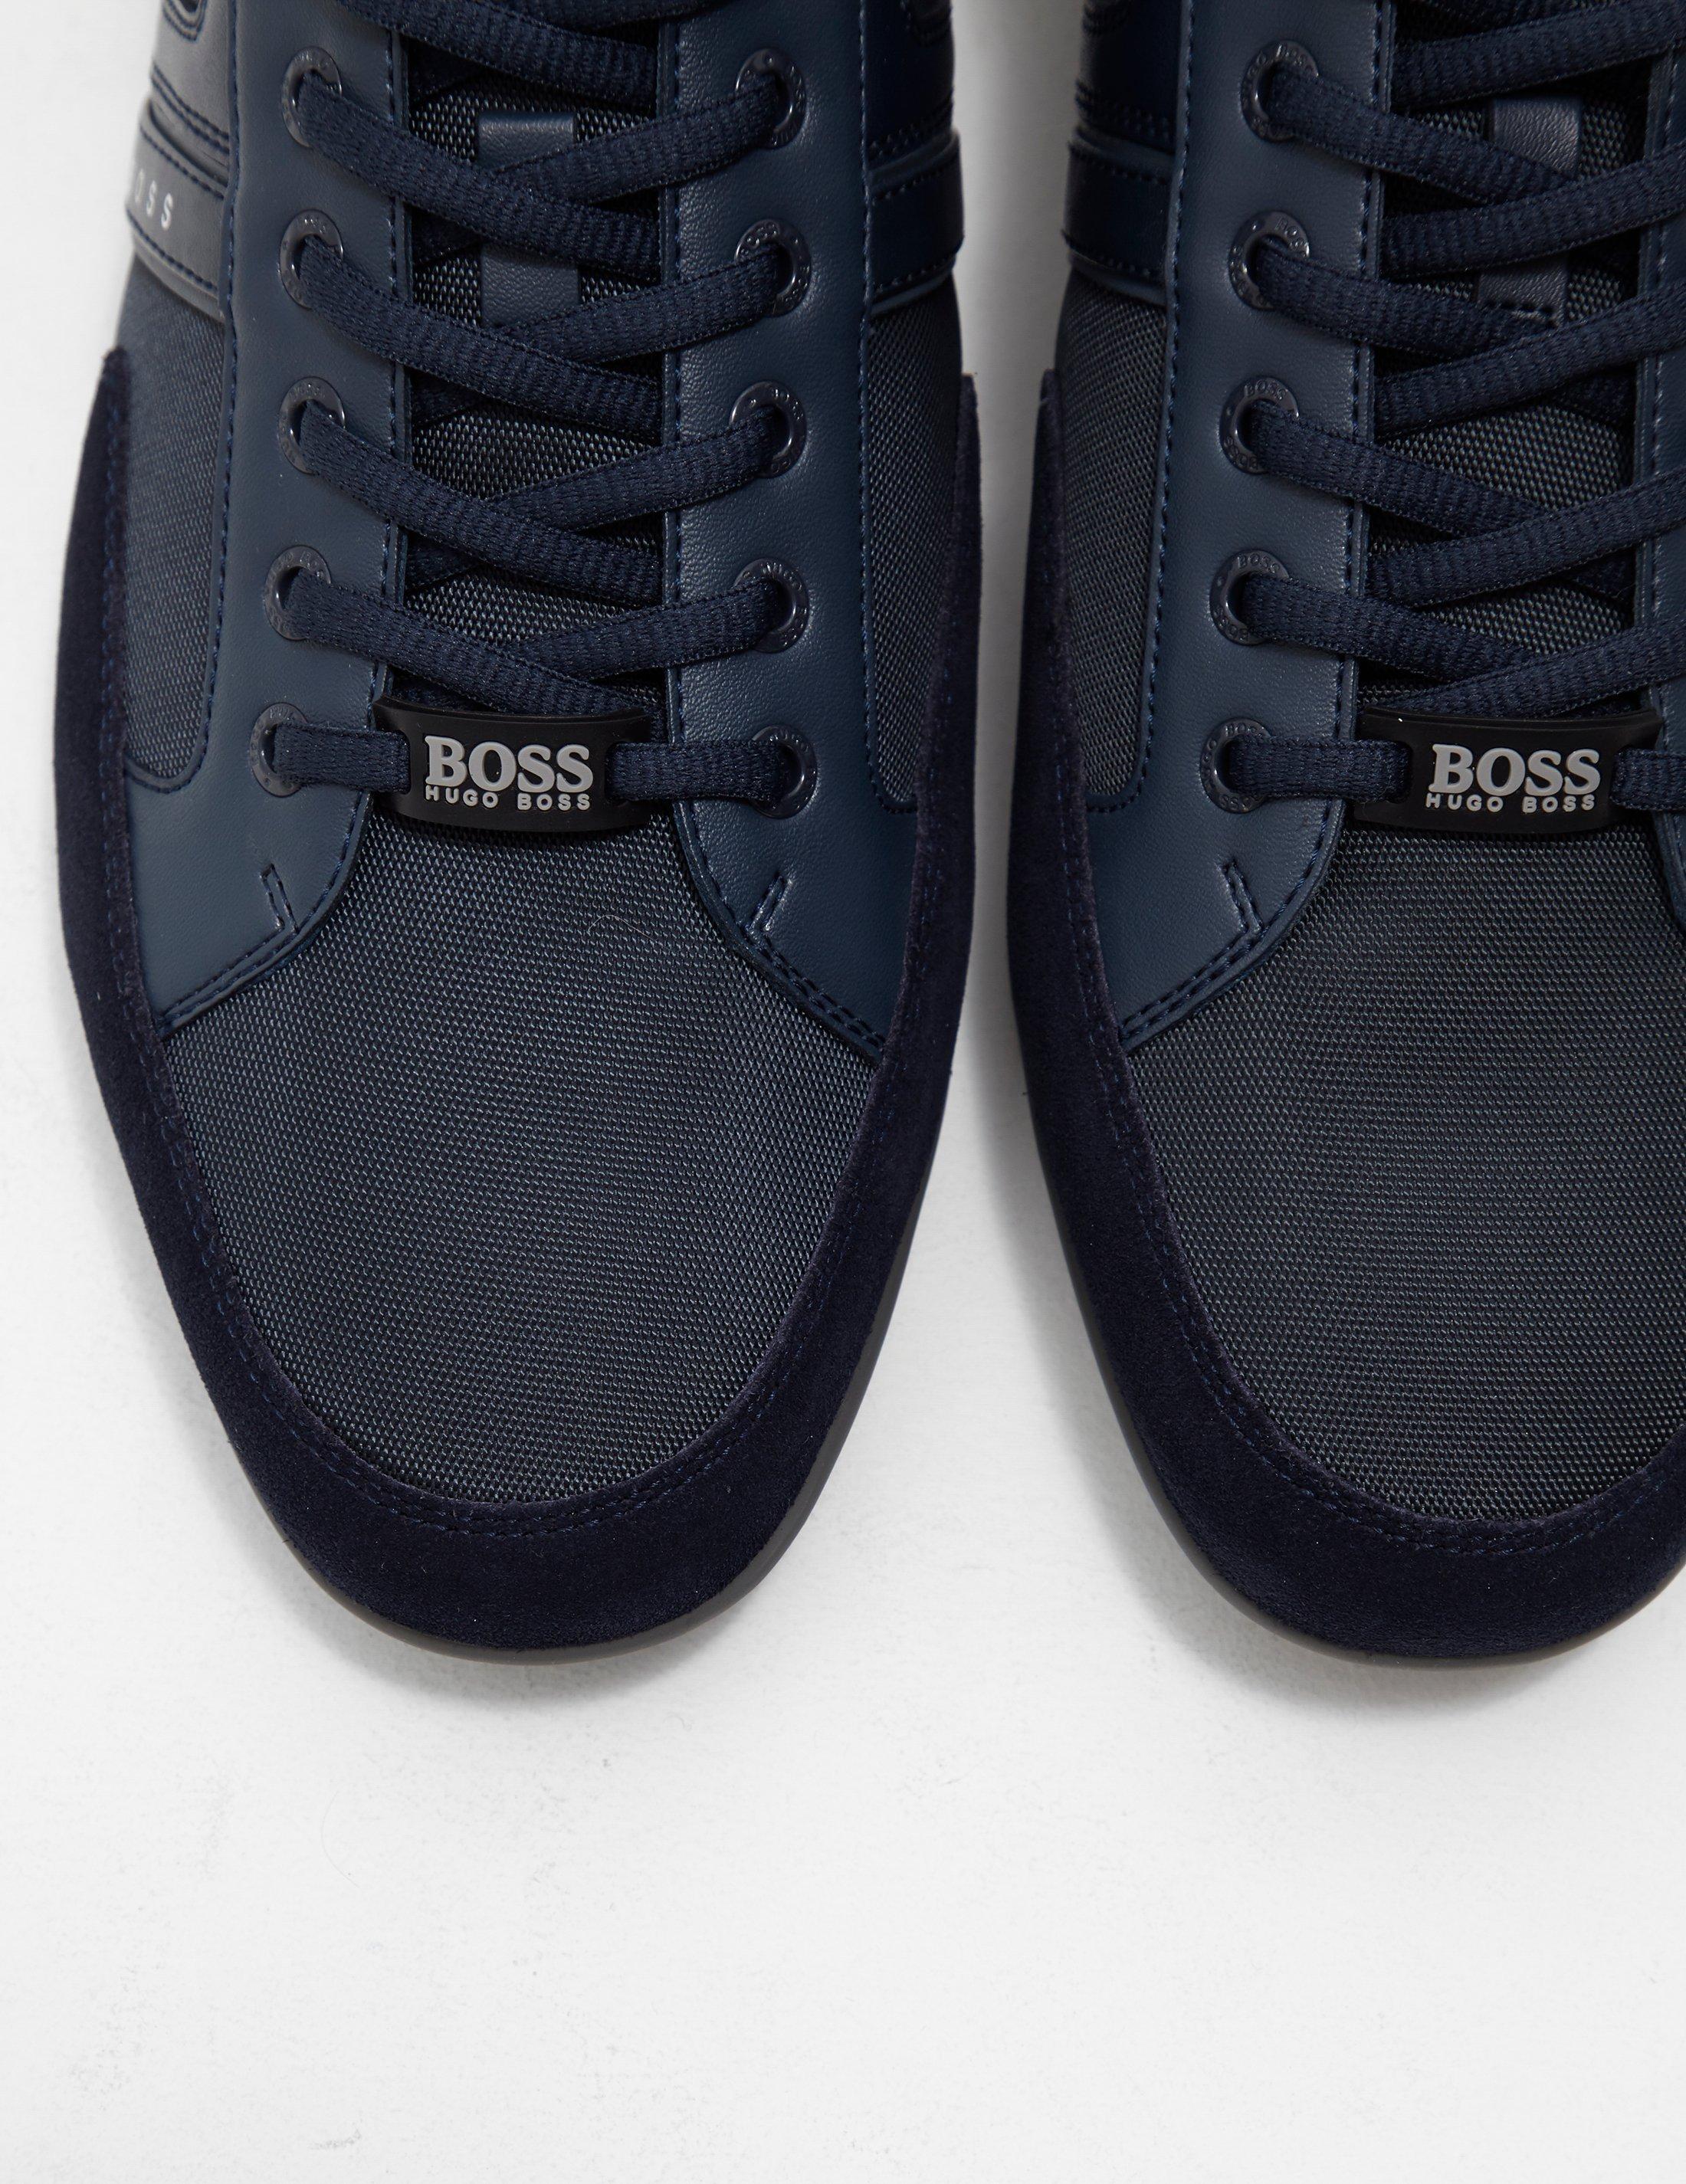 BOSS by HUGO BOSS Suede Spacit Sneakers in Navy (Blue) for Men - Lyst